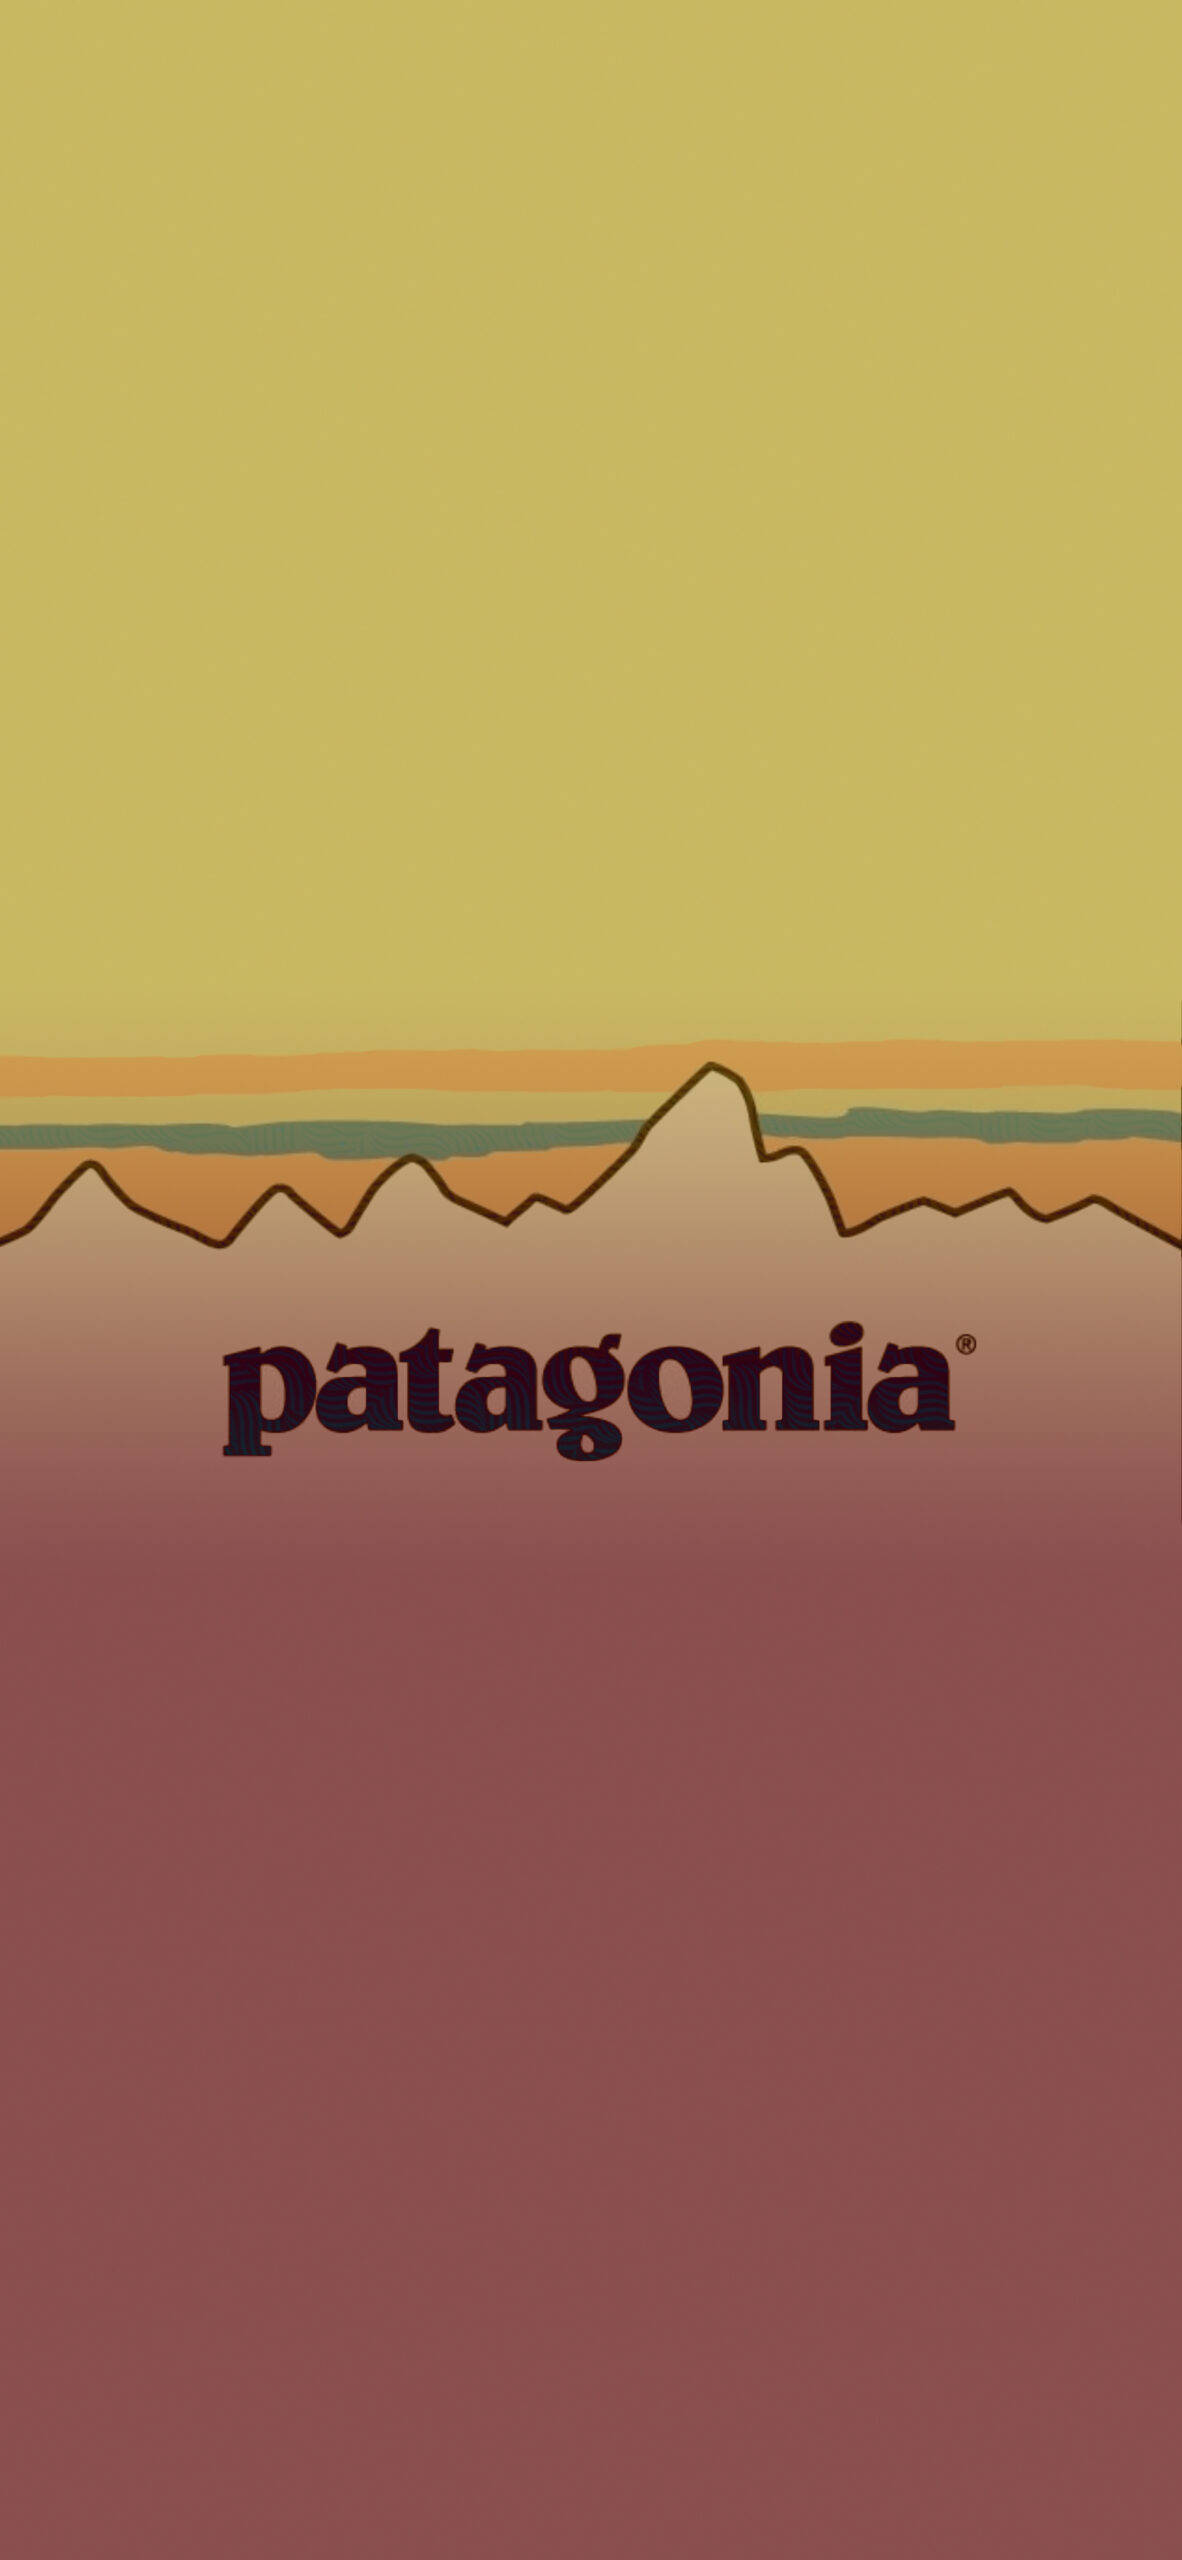 Download Patagonia Brown Yellow Logo Wallpaper | Wallpapers.com